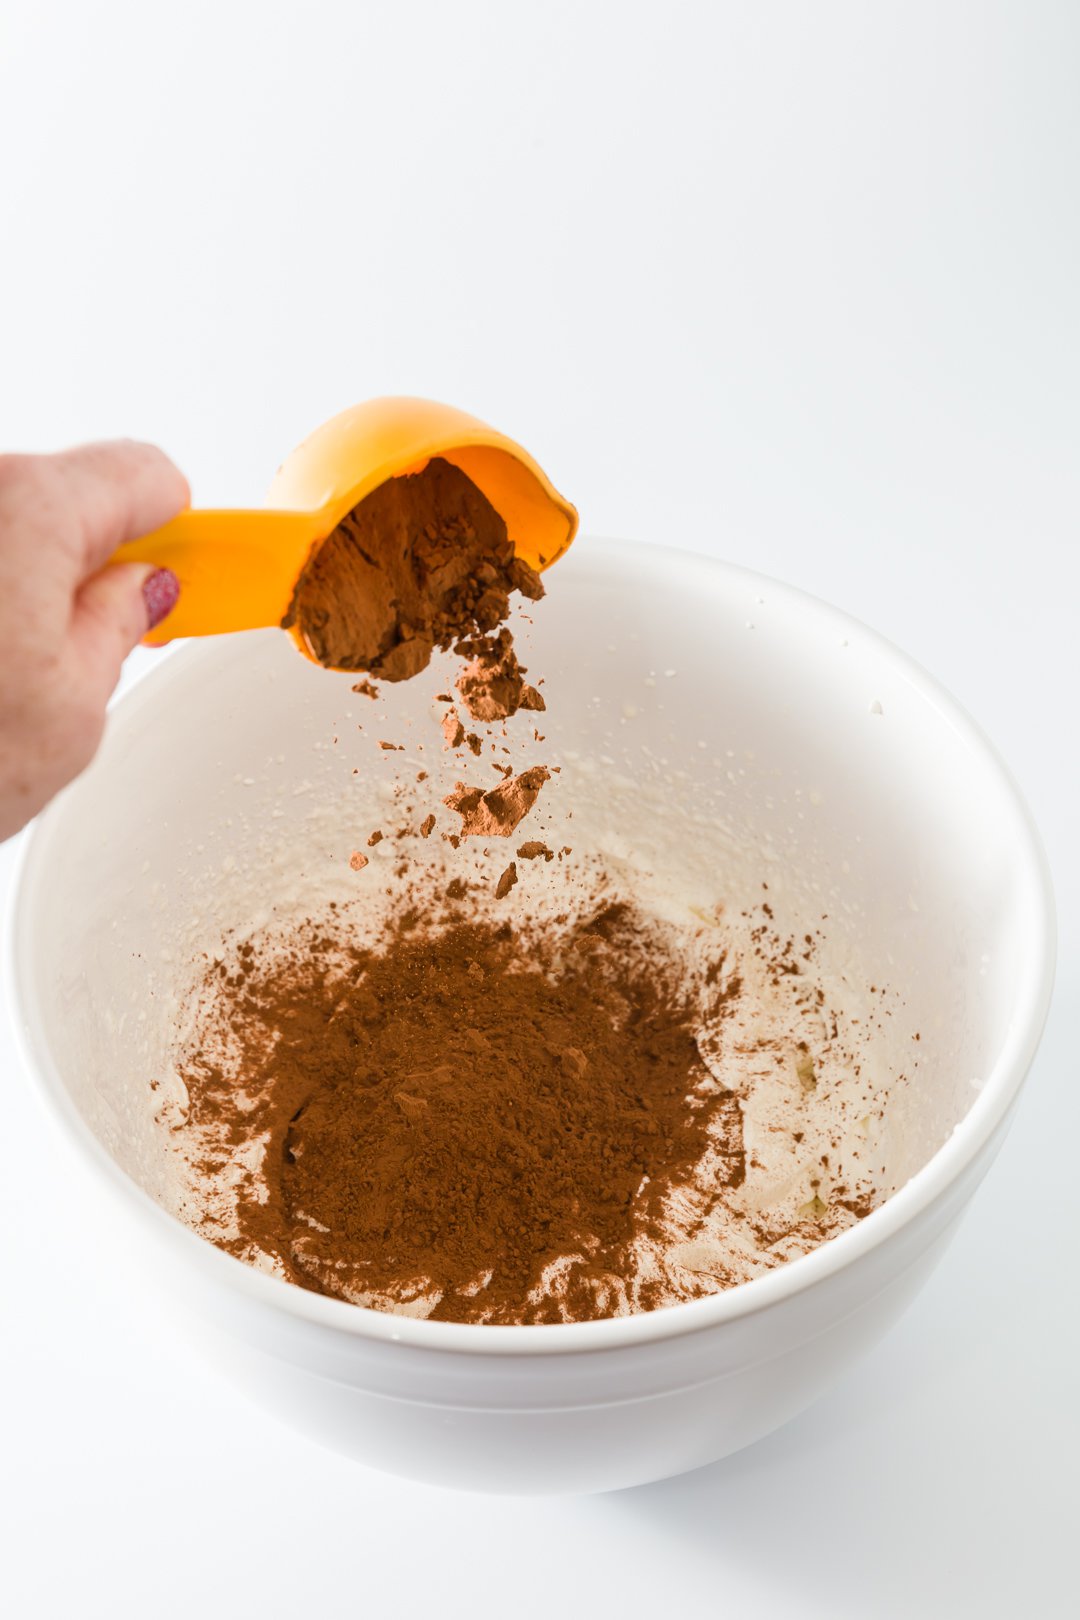 Adding cocoa powder to chocolate whipped cream